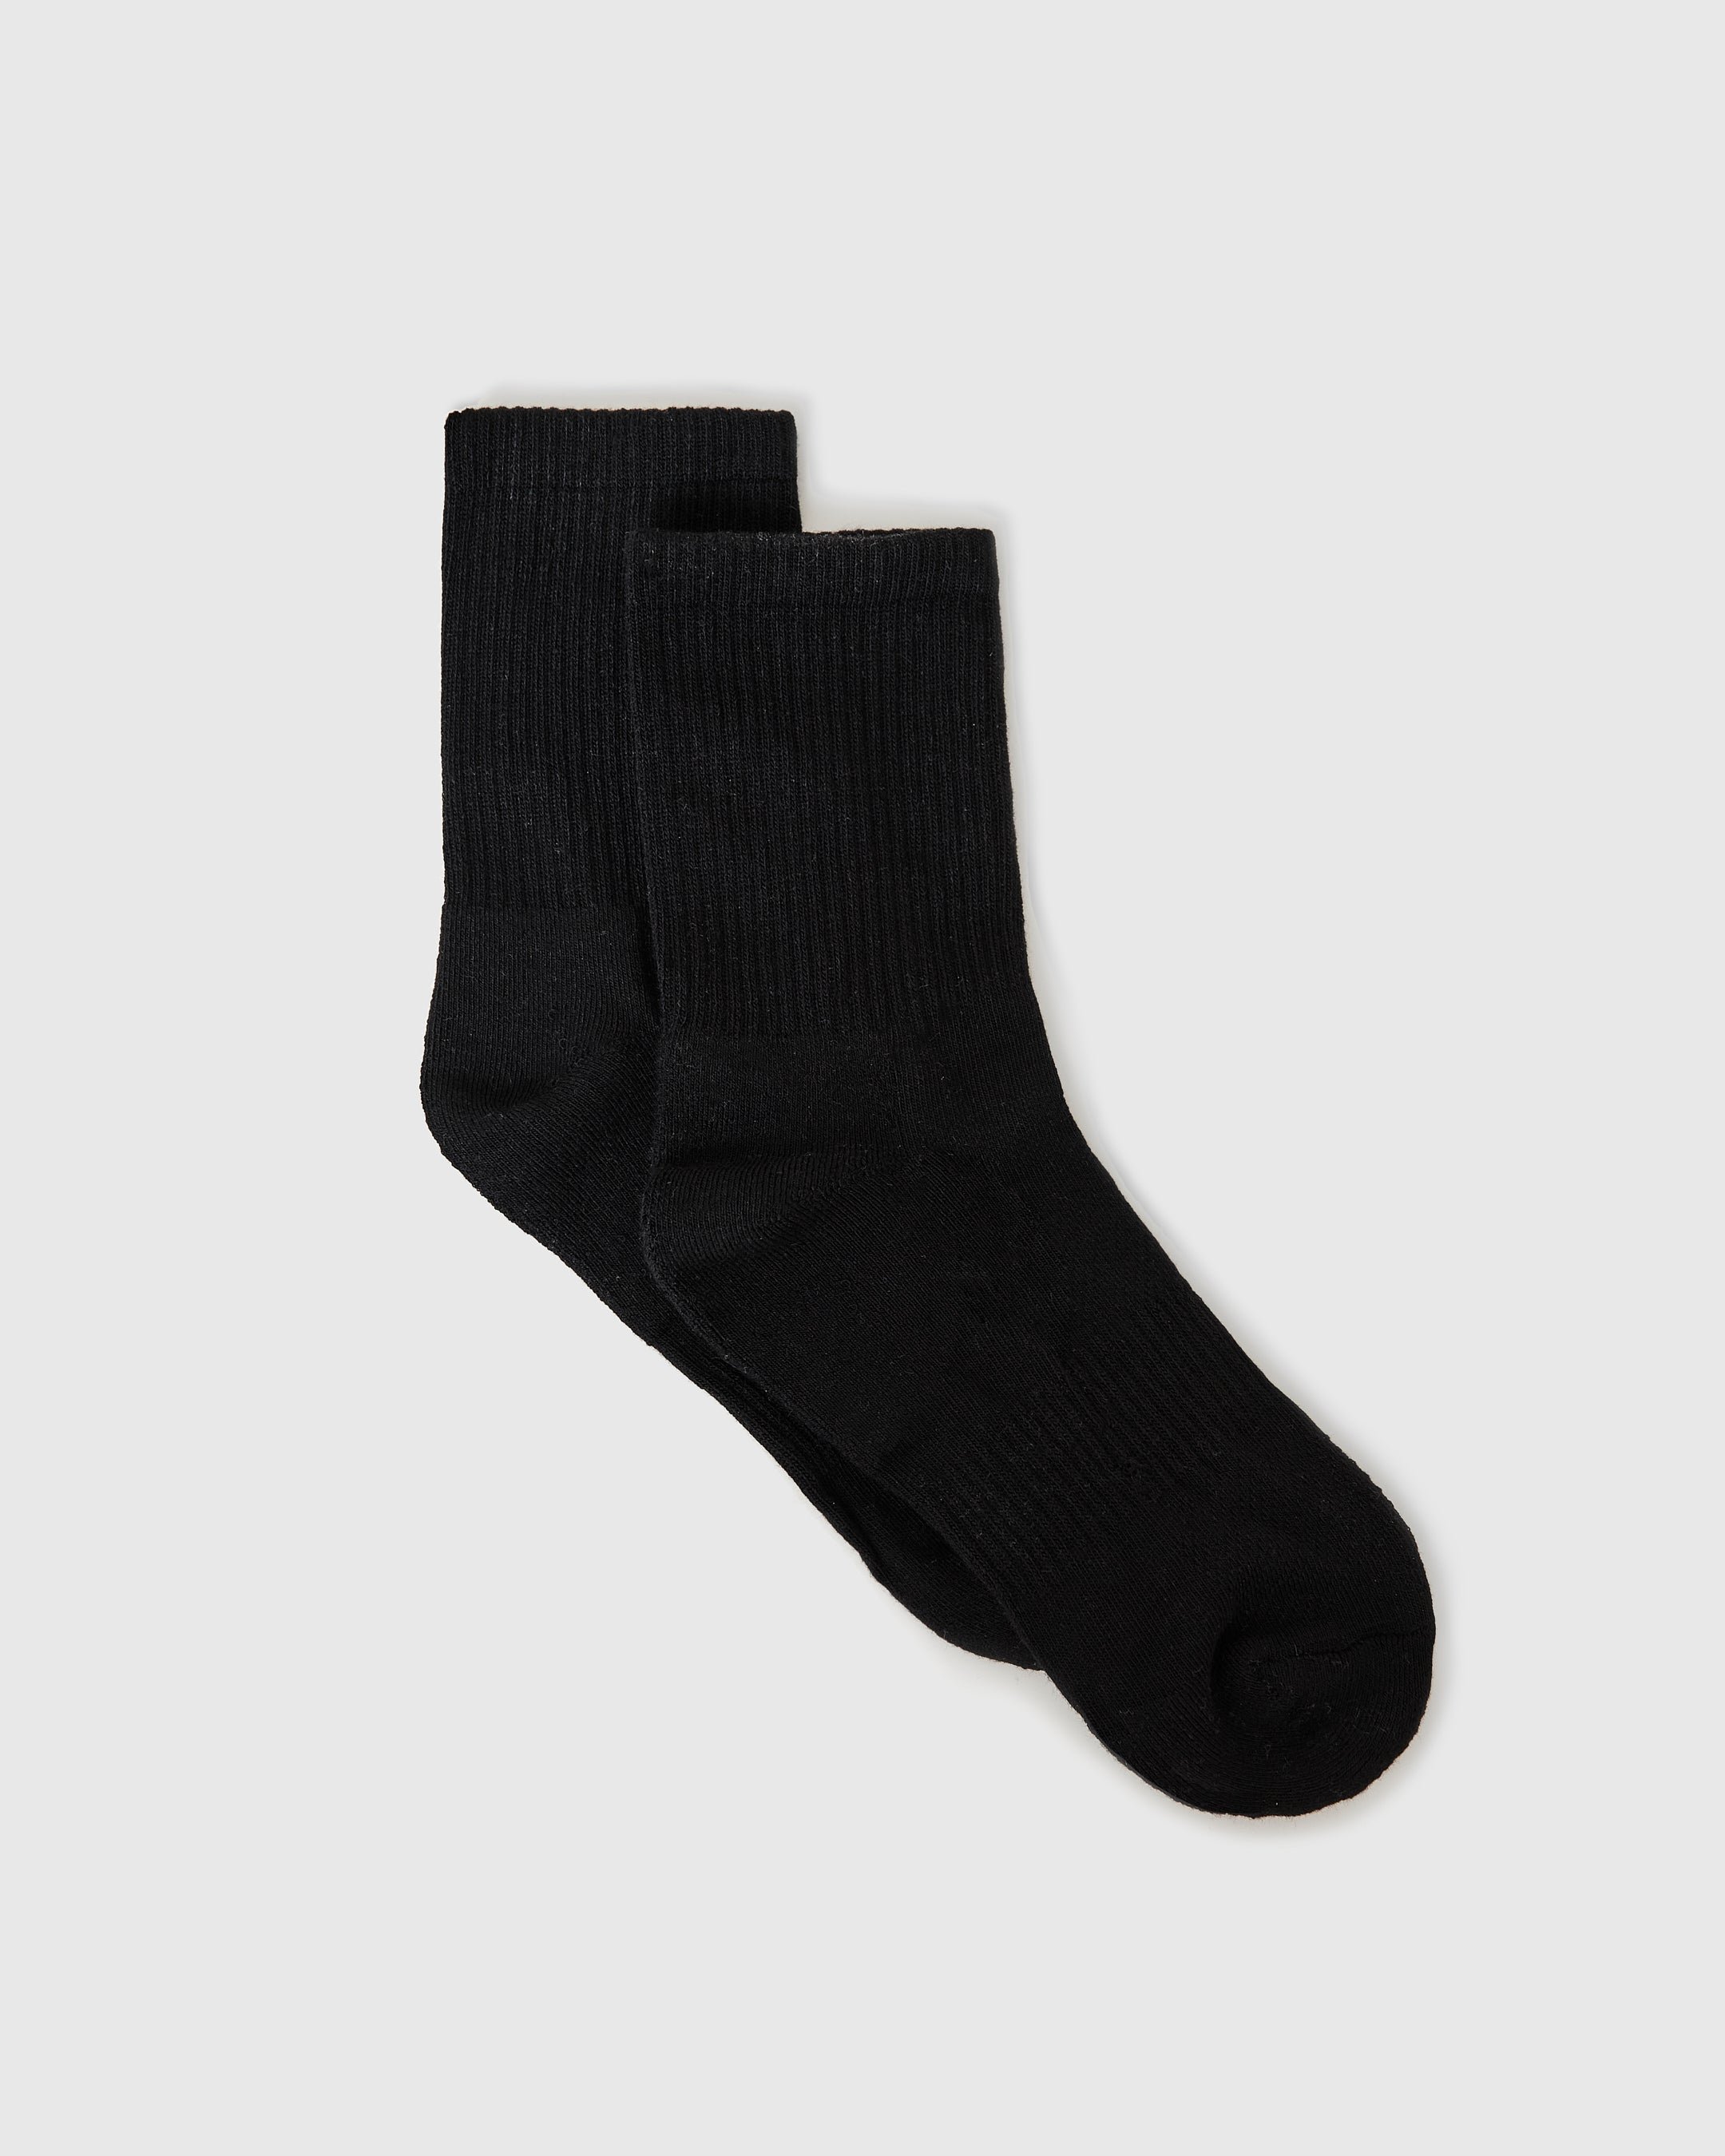 Black Half Crew Socks 6-Pack